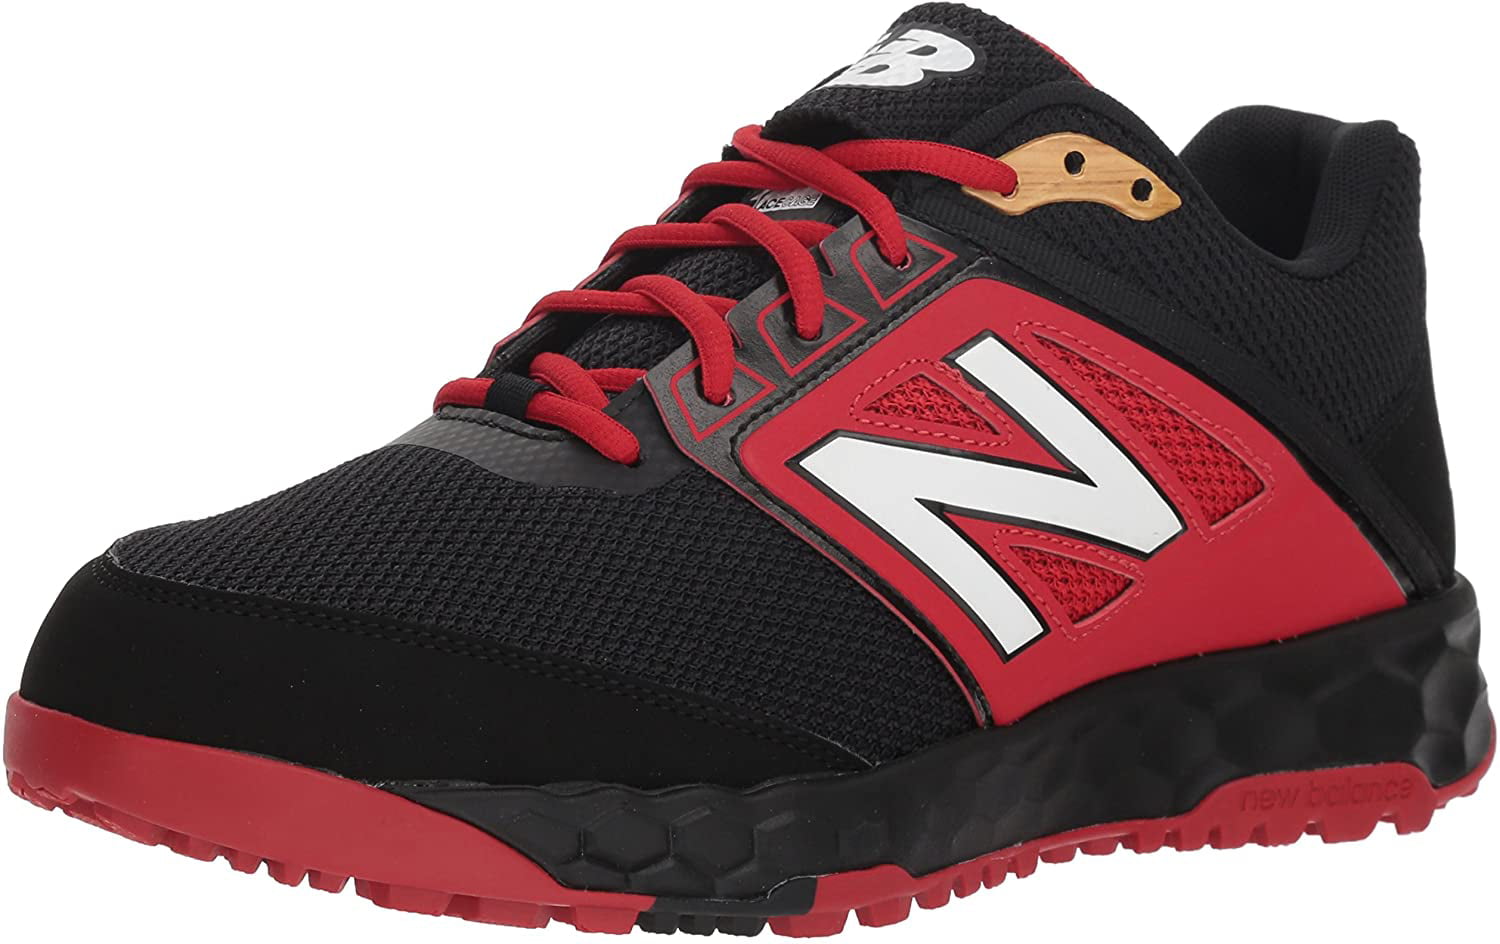 New Balance Men's 3000v4 Turf Baseball Shoe, Black/red, 7 2E US ...